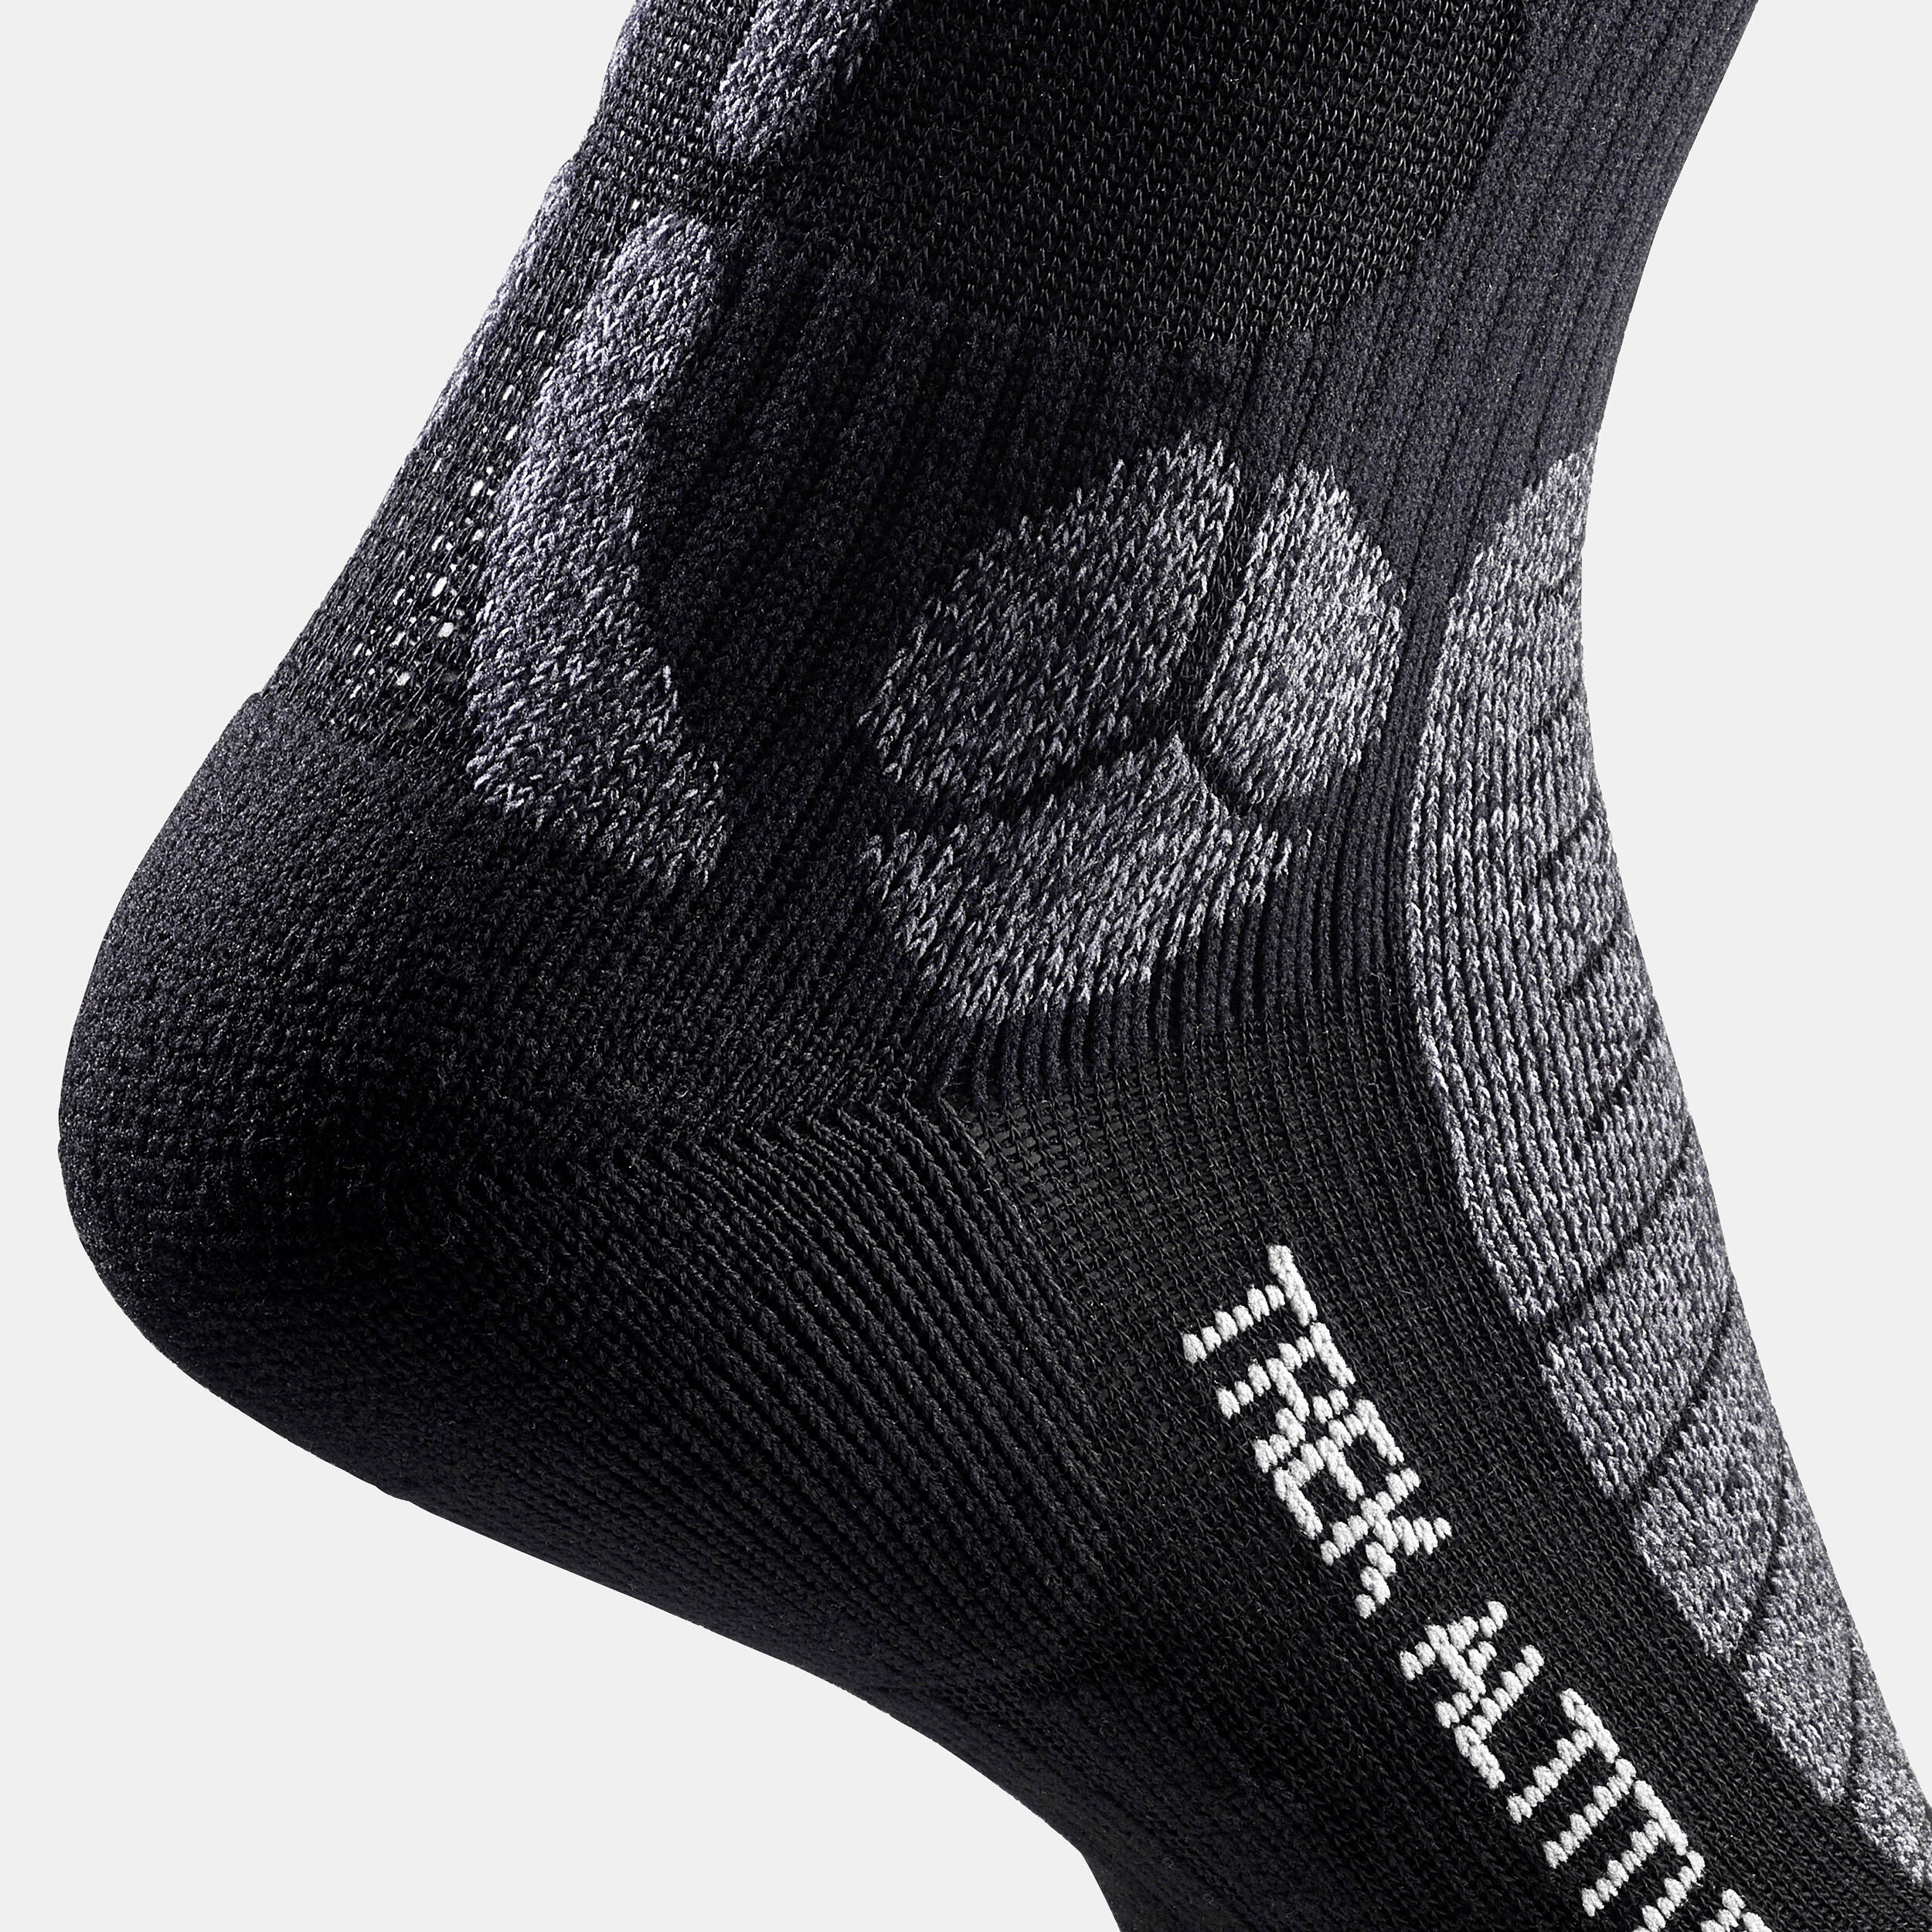 Trek Altitude Socks (pack of 1 pair) - Black 4/8